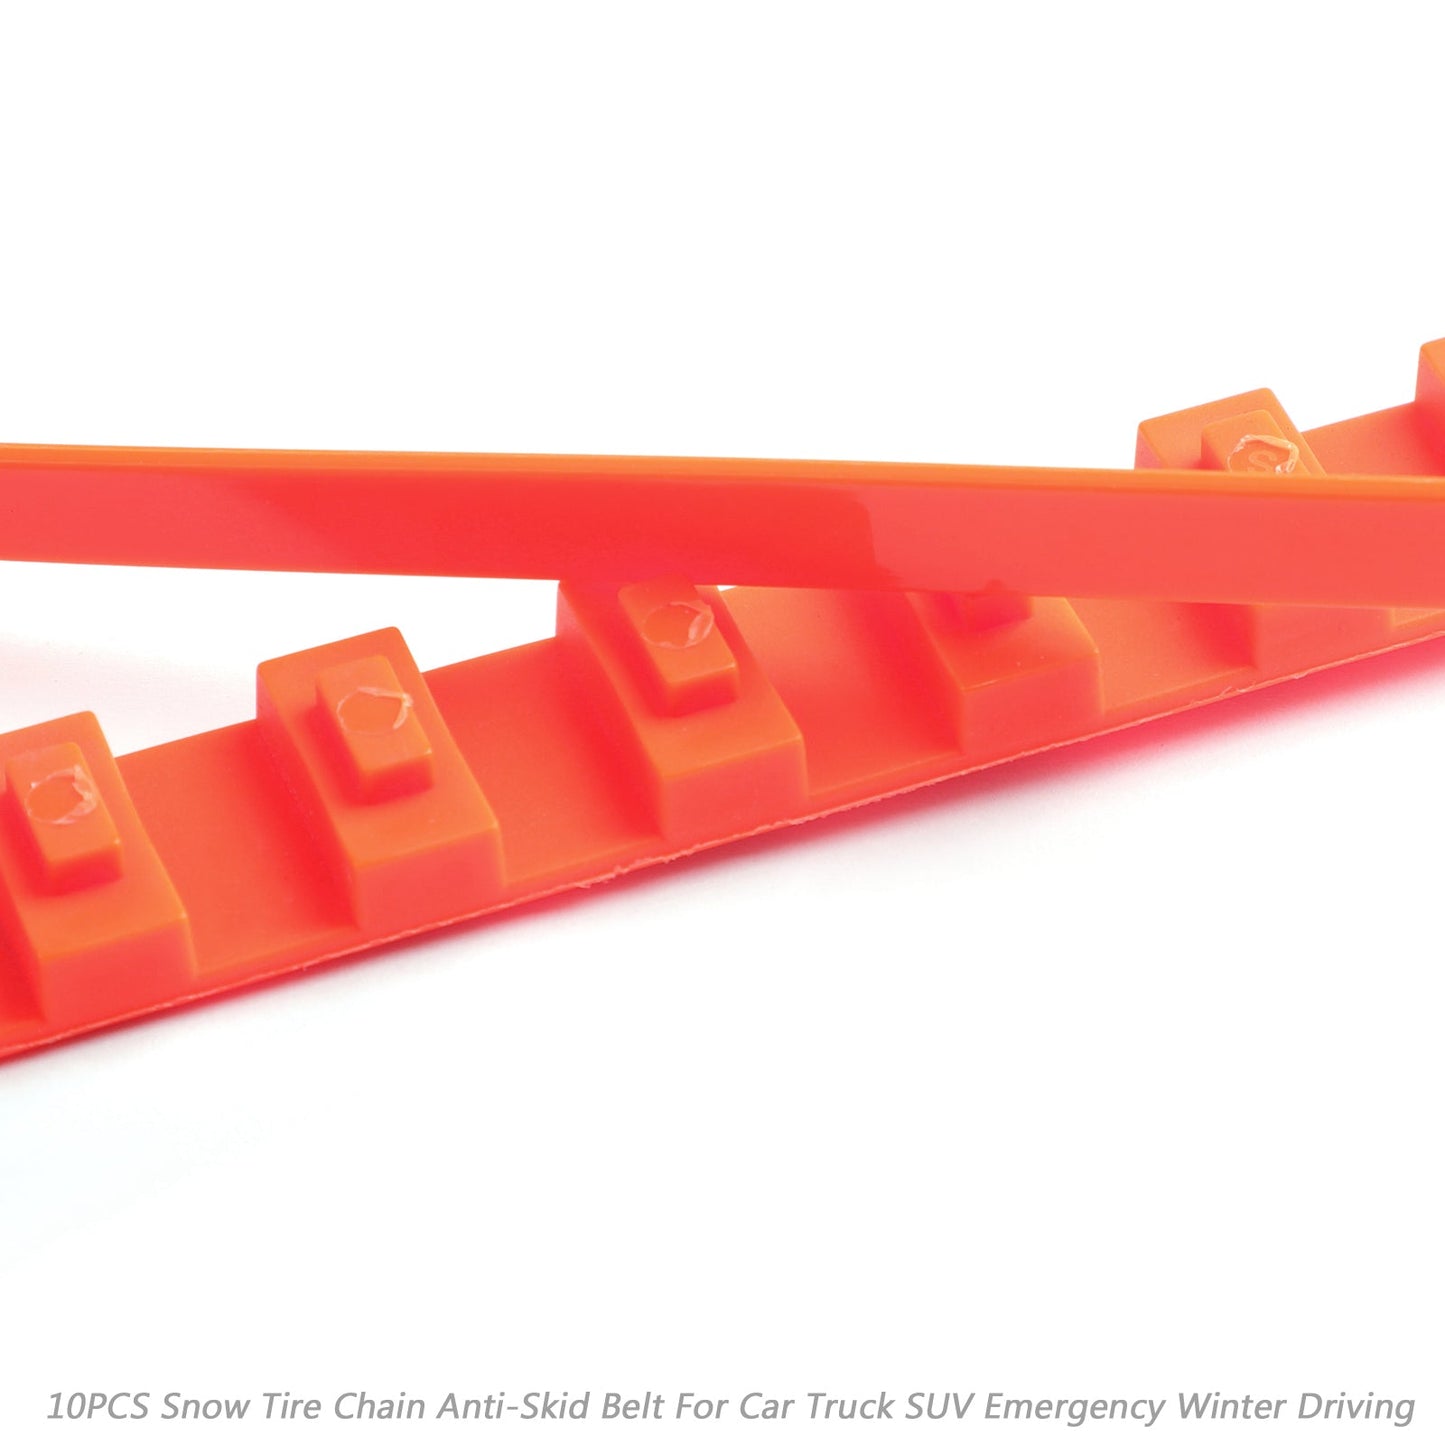 10PCS Snow Tire Chain Anti-Skid Belt For Car Truck SUV Emergency Winter Driving Orange